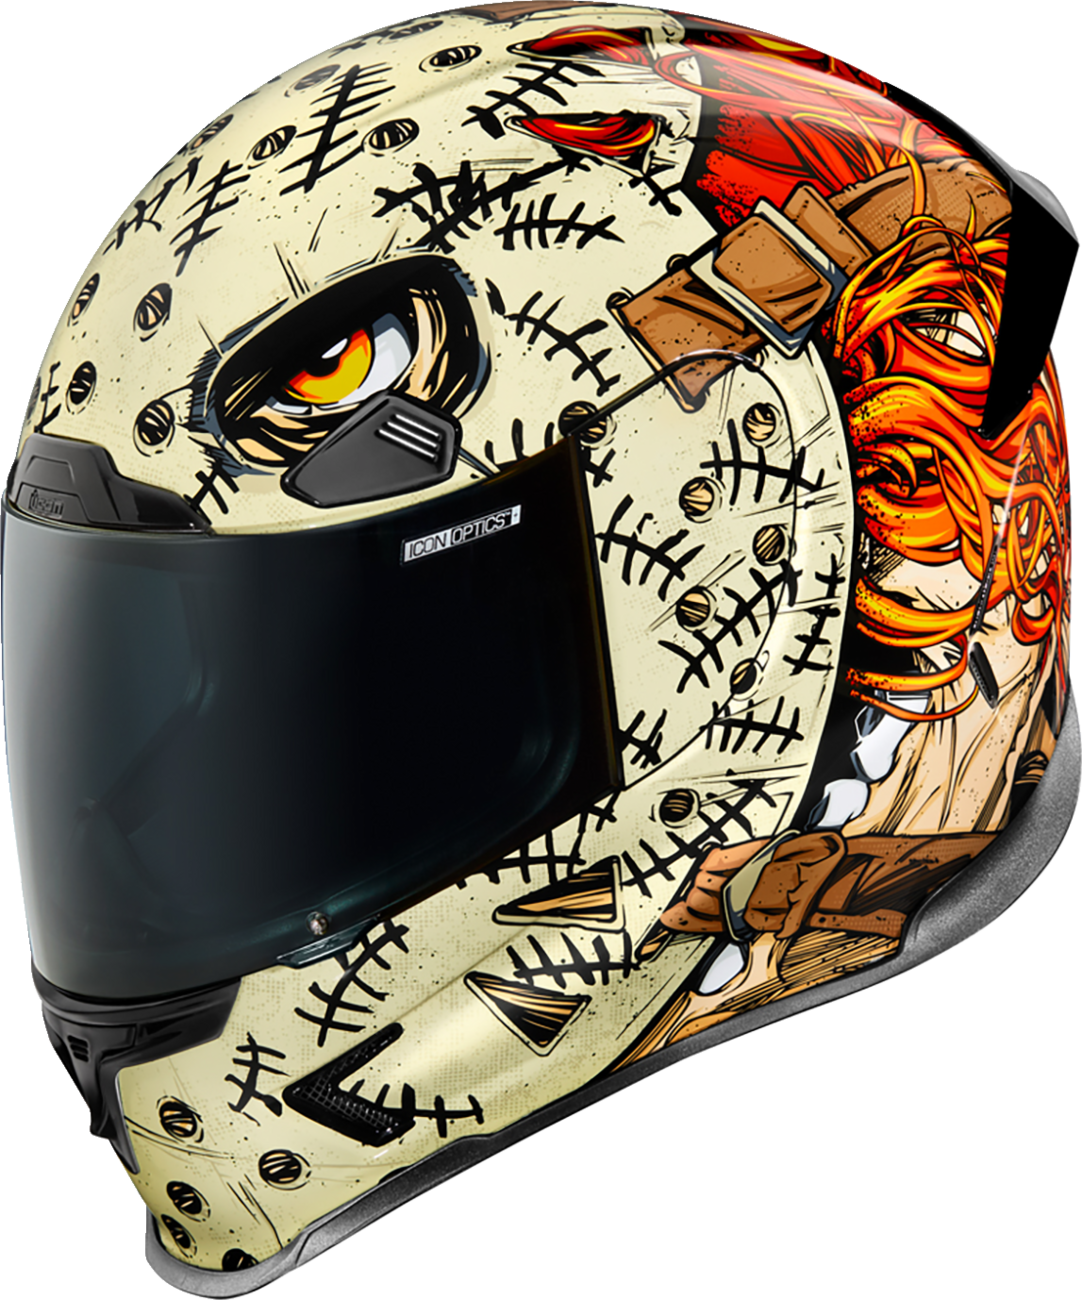 Icon Airframe Pro Topshelf Unisex Adult Motorcycle Street Race Full Face Helmet